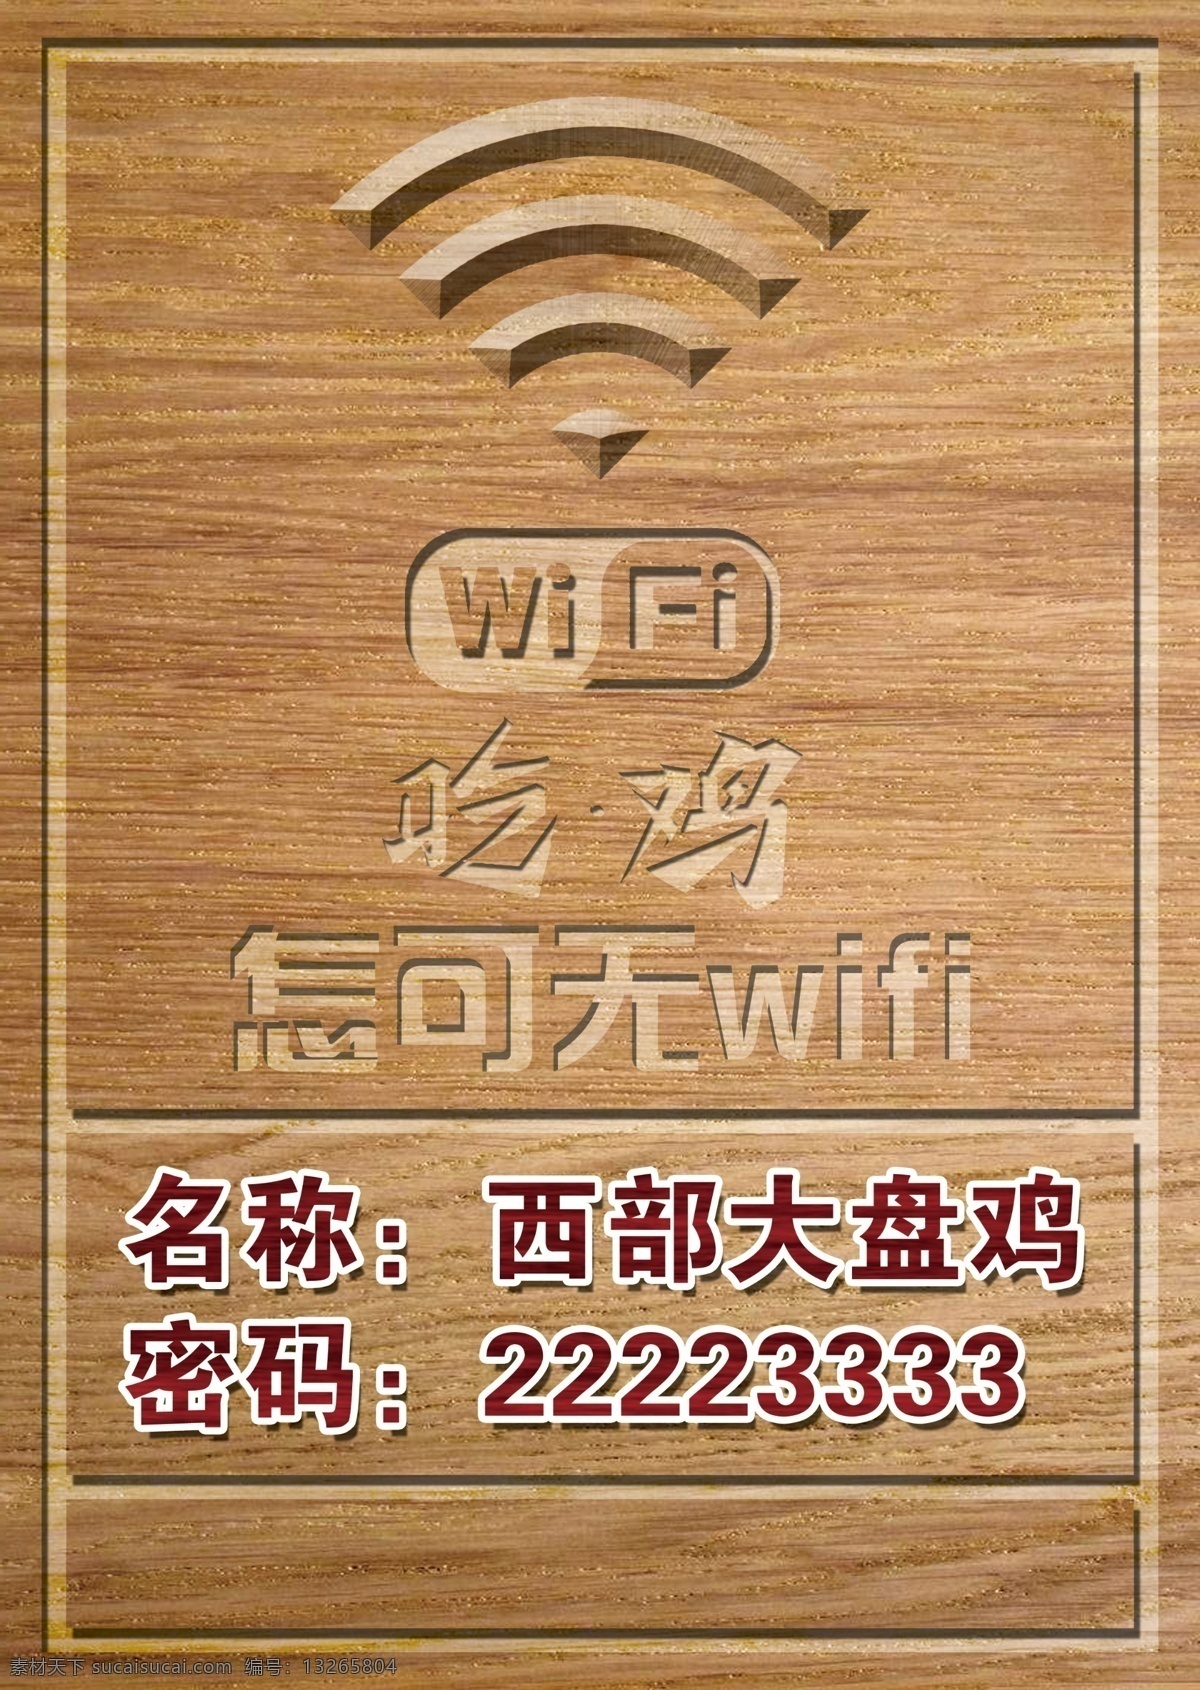 wifi wifi标志 wifi密码 wifi名称 无线网络名称 无限网络标志 电信 免费无线上网 帐号密码